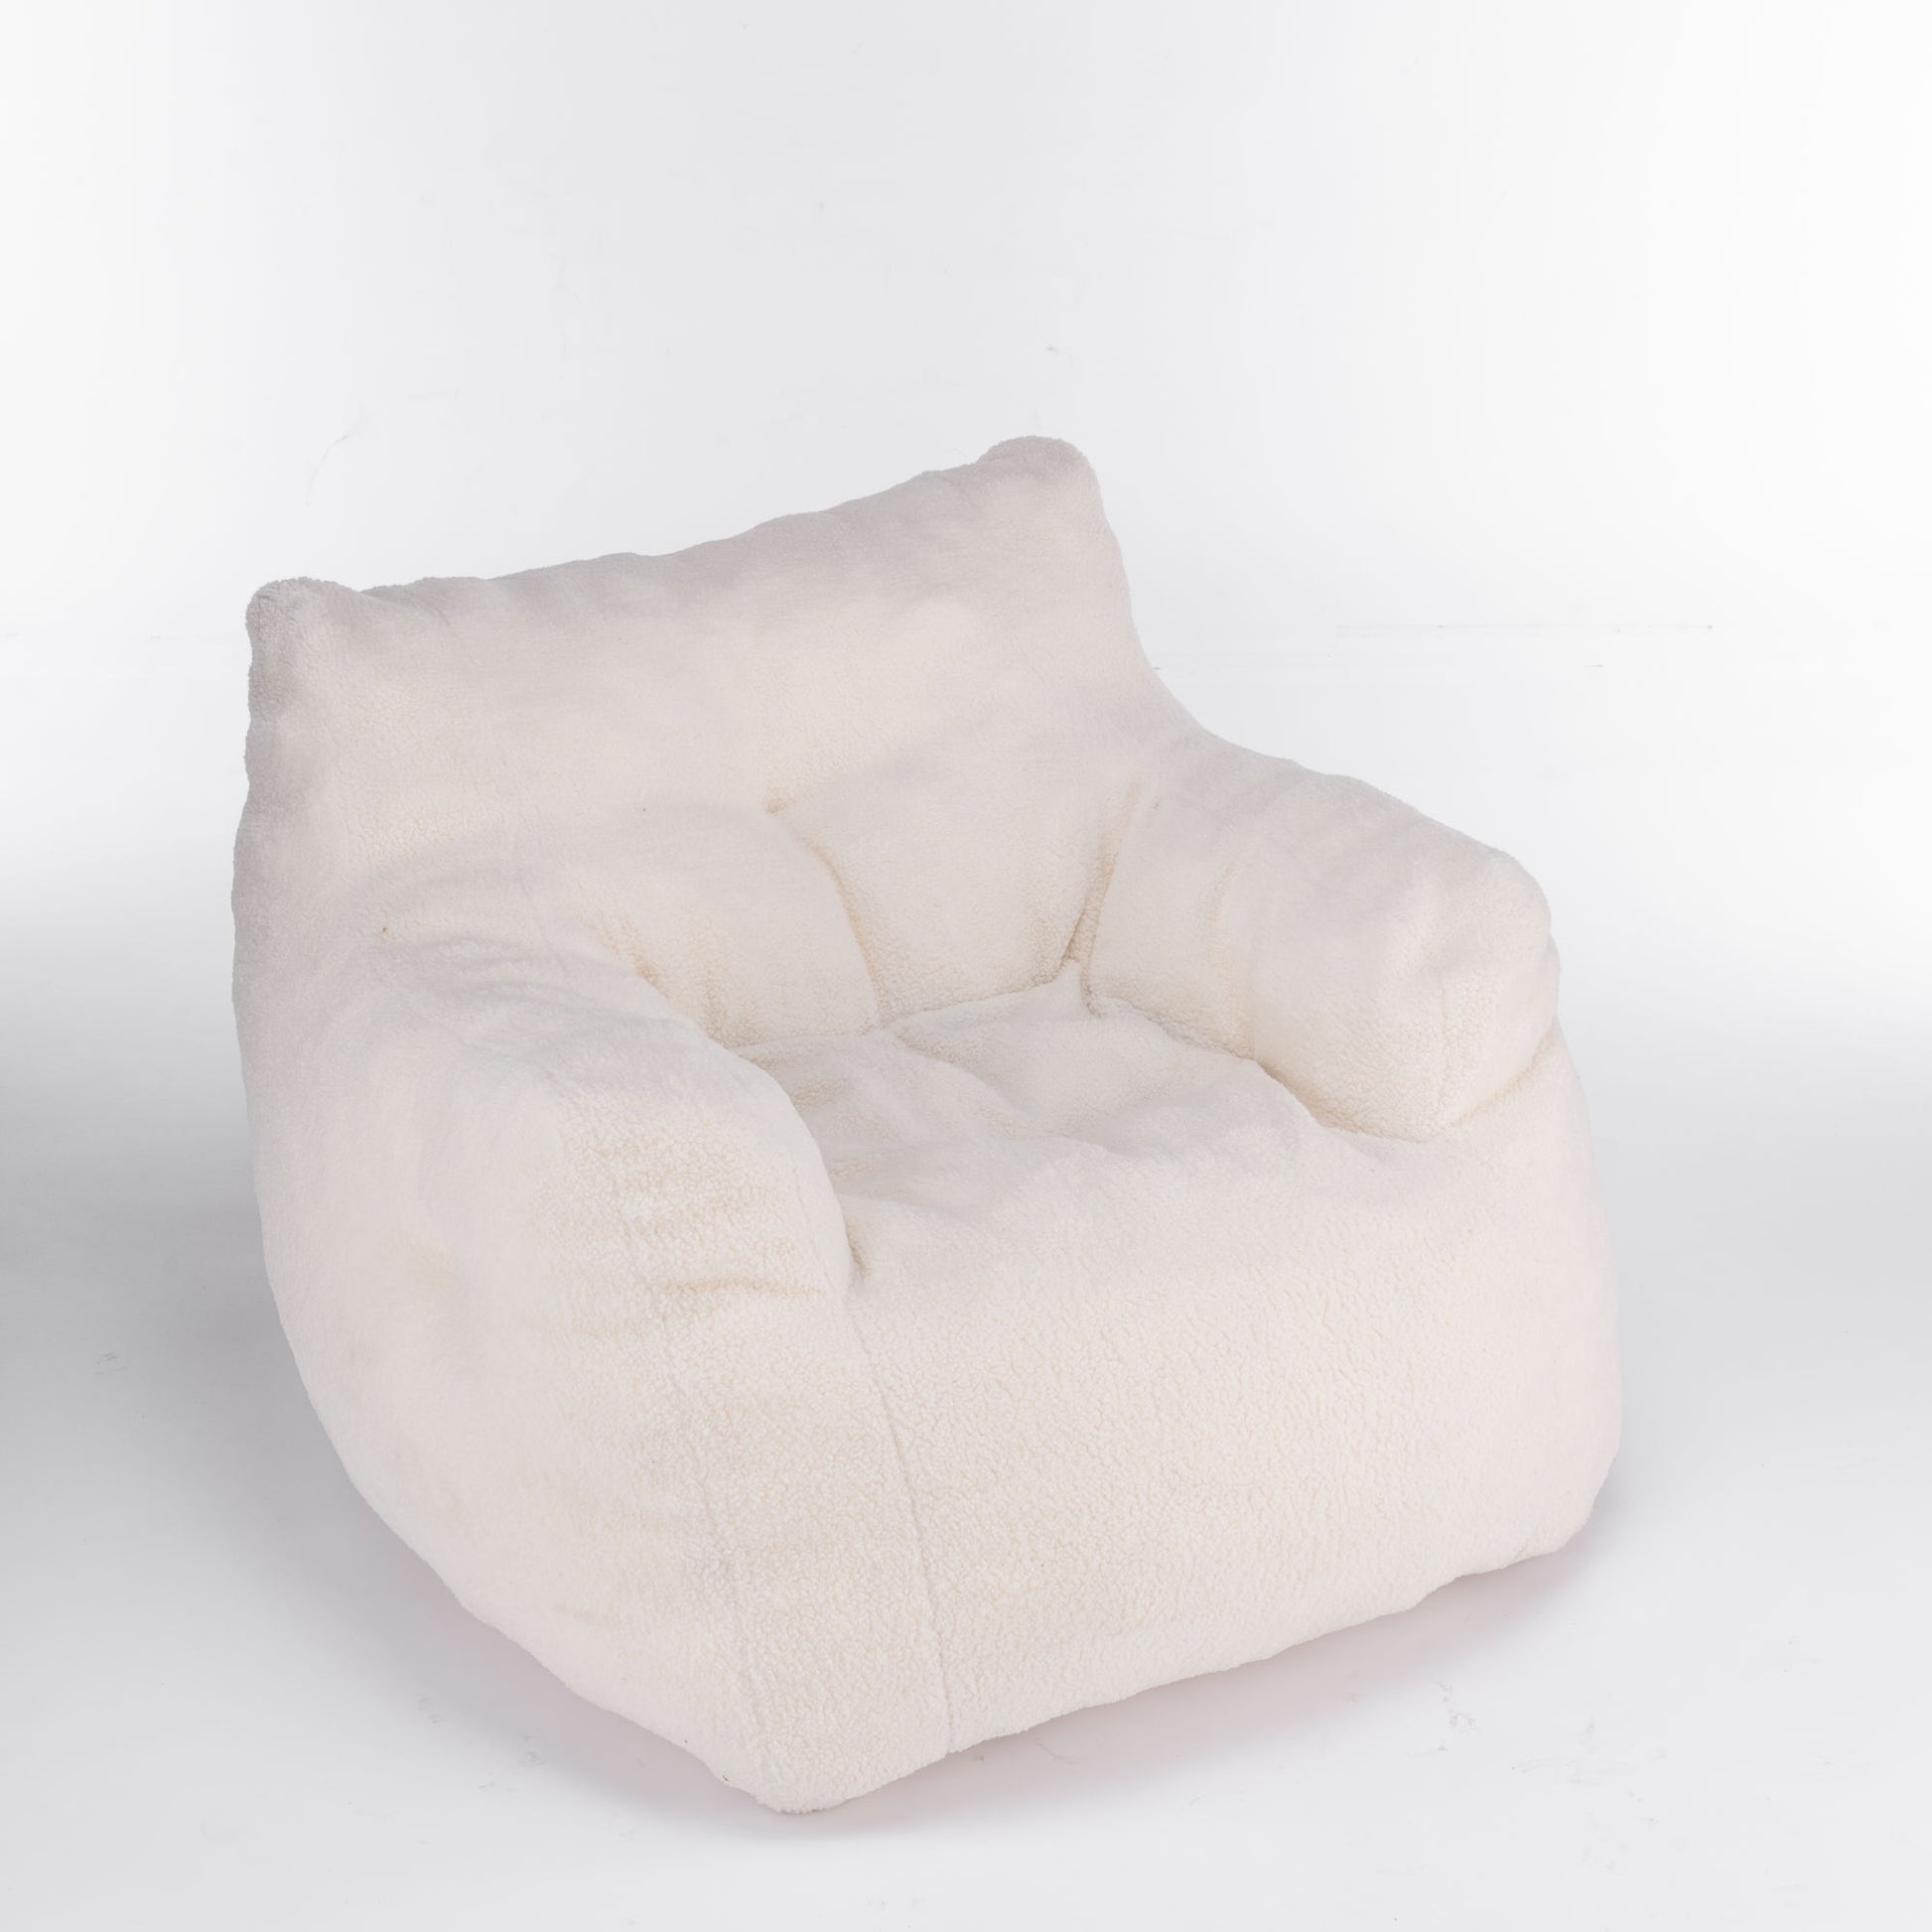 Soft Tufted Teddy Foam Bean Bag Chair - Play. Learn. Thrive. ™